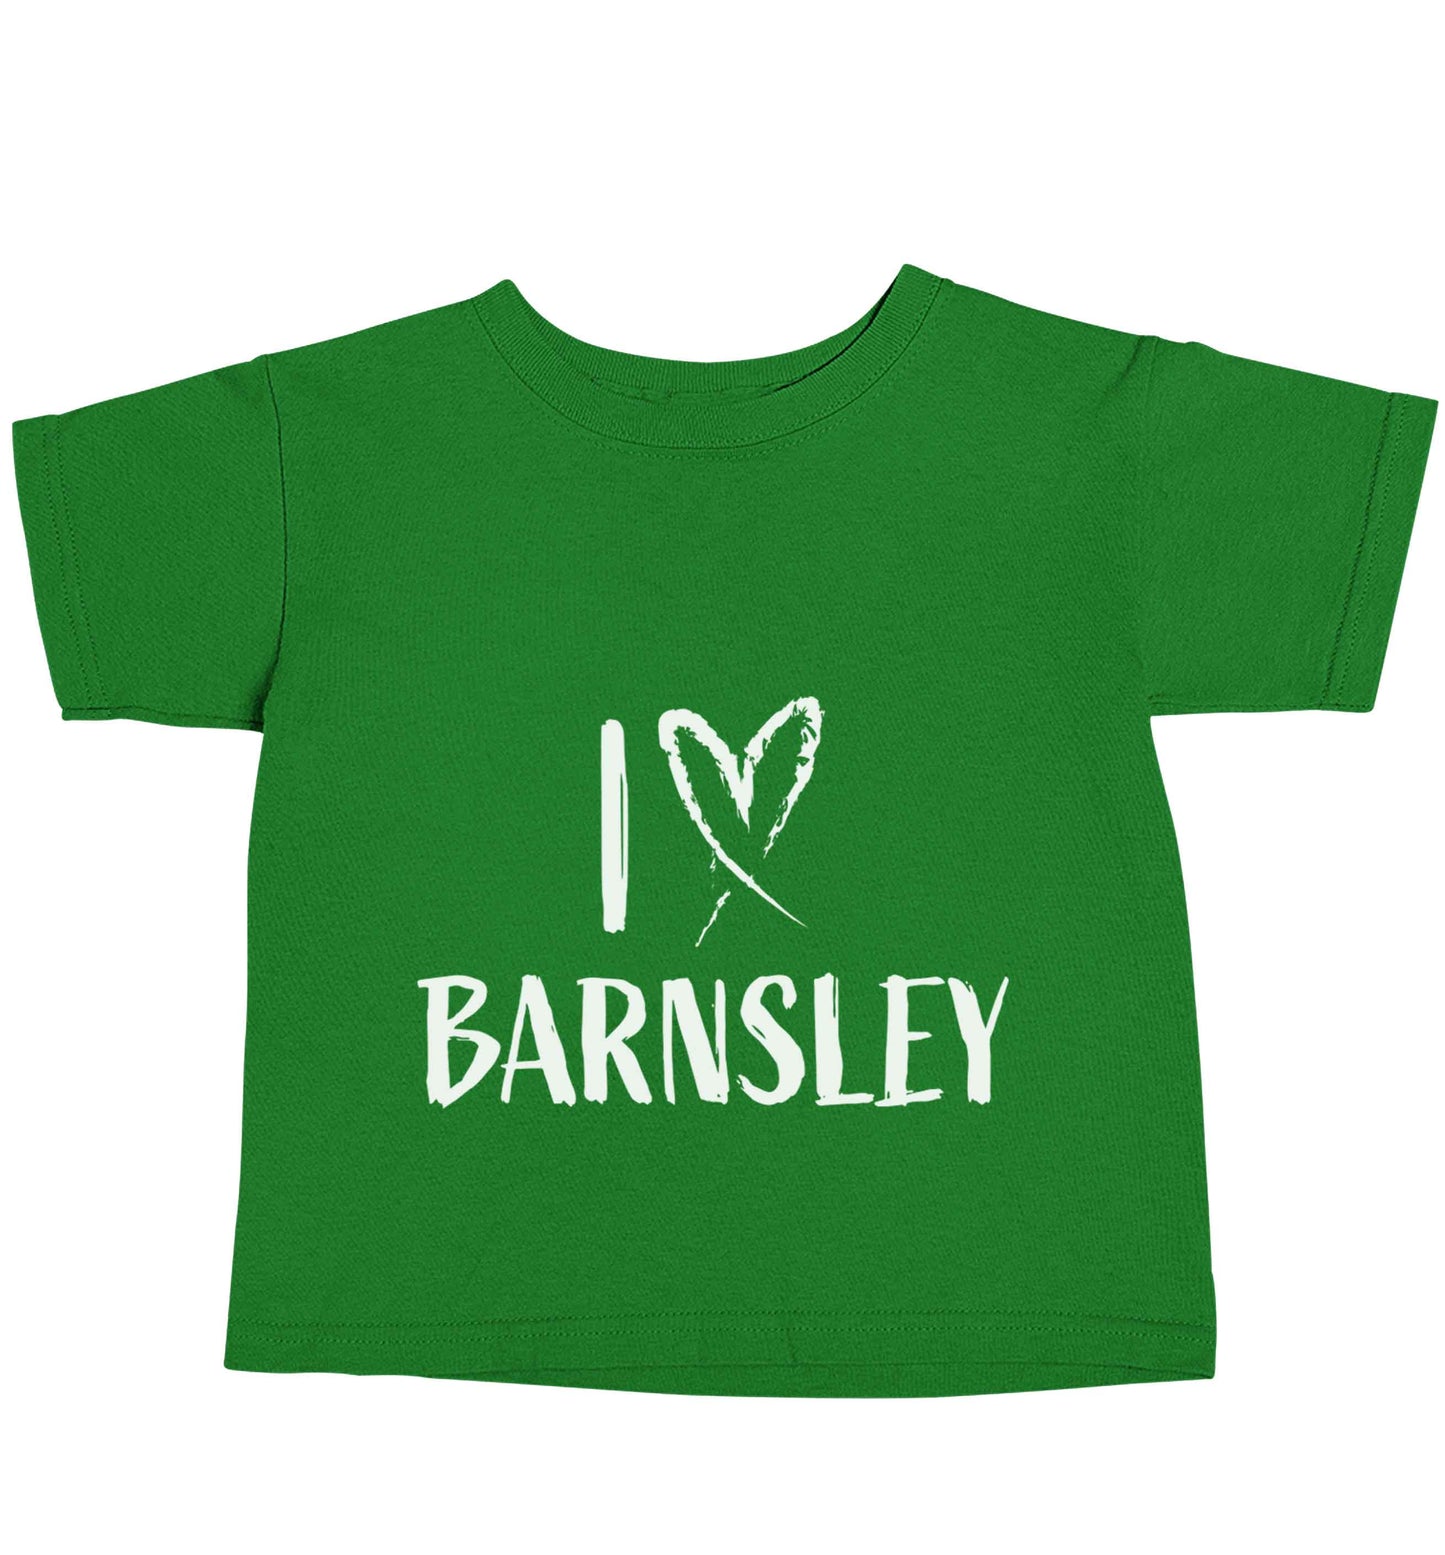 I love Barnsley green baby toddler Tshirt 2 Years